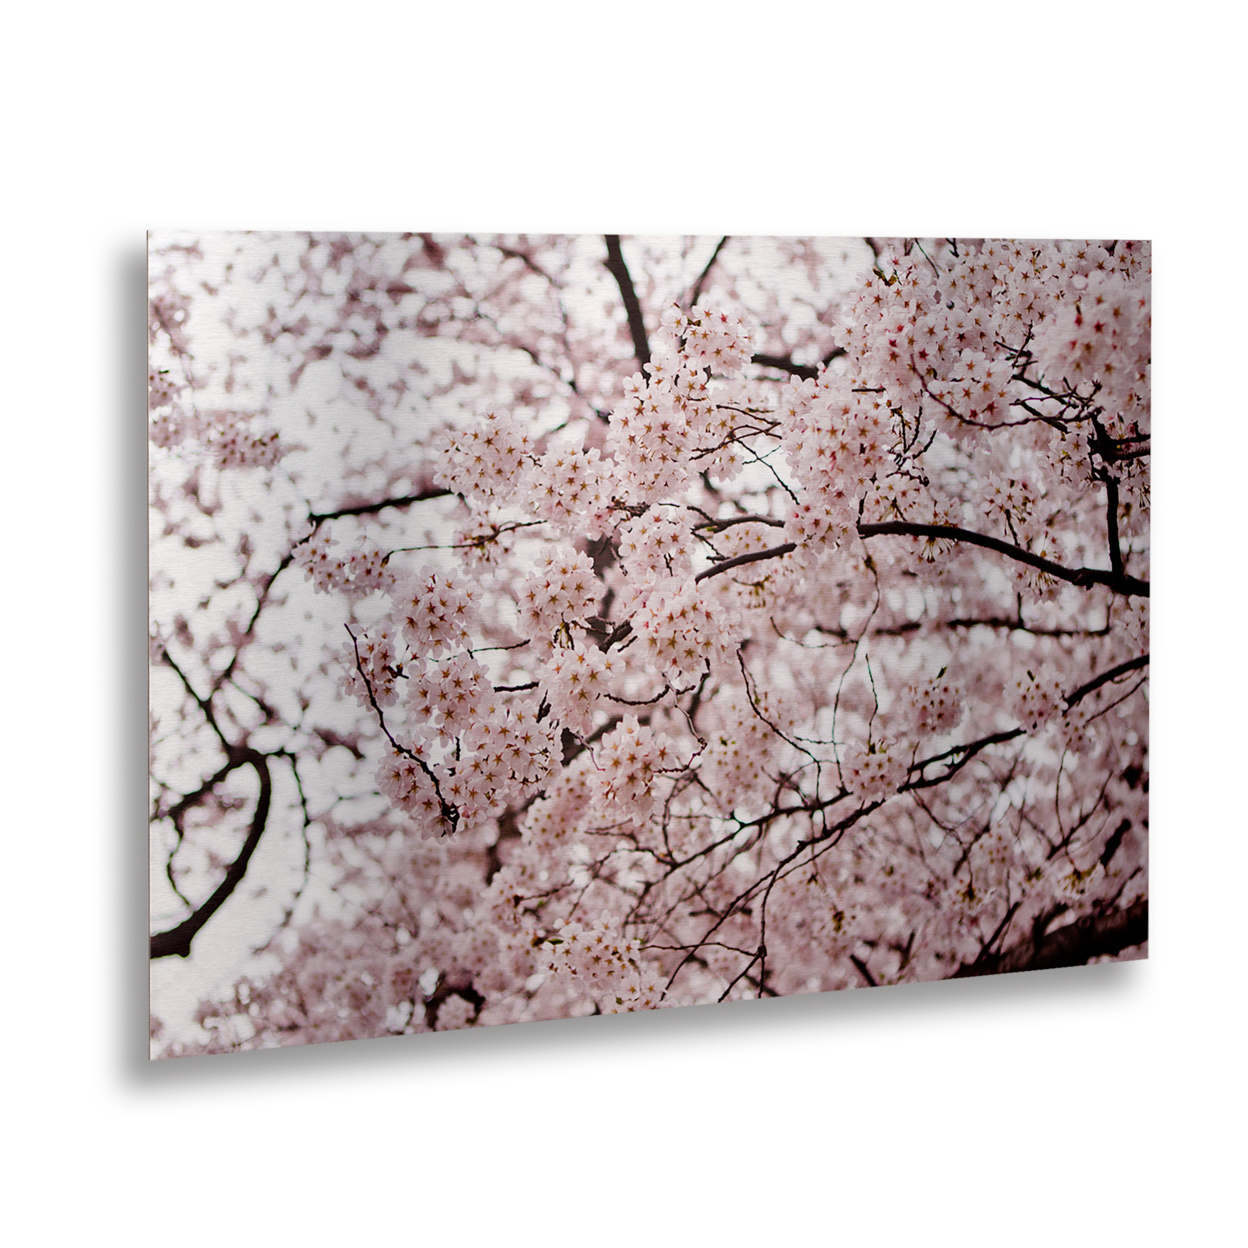 Ariane Moshayedi 'Cherry Blossoms' Floating Brushed Aluminum Art 16 X 22